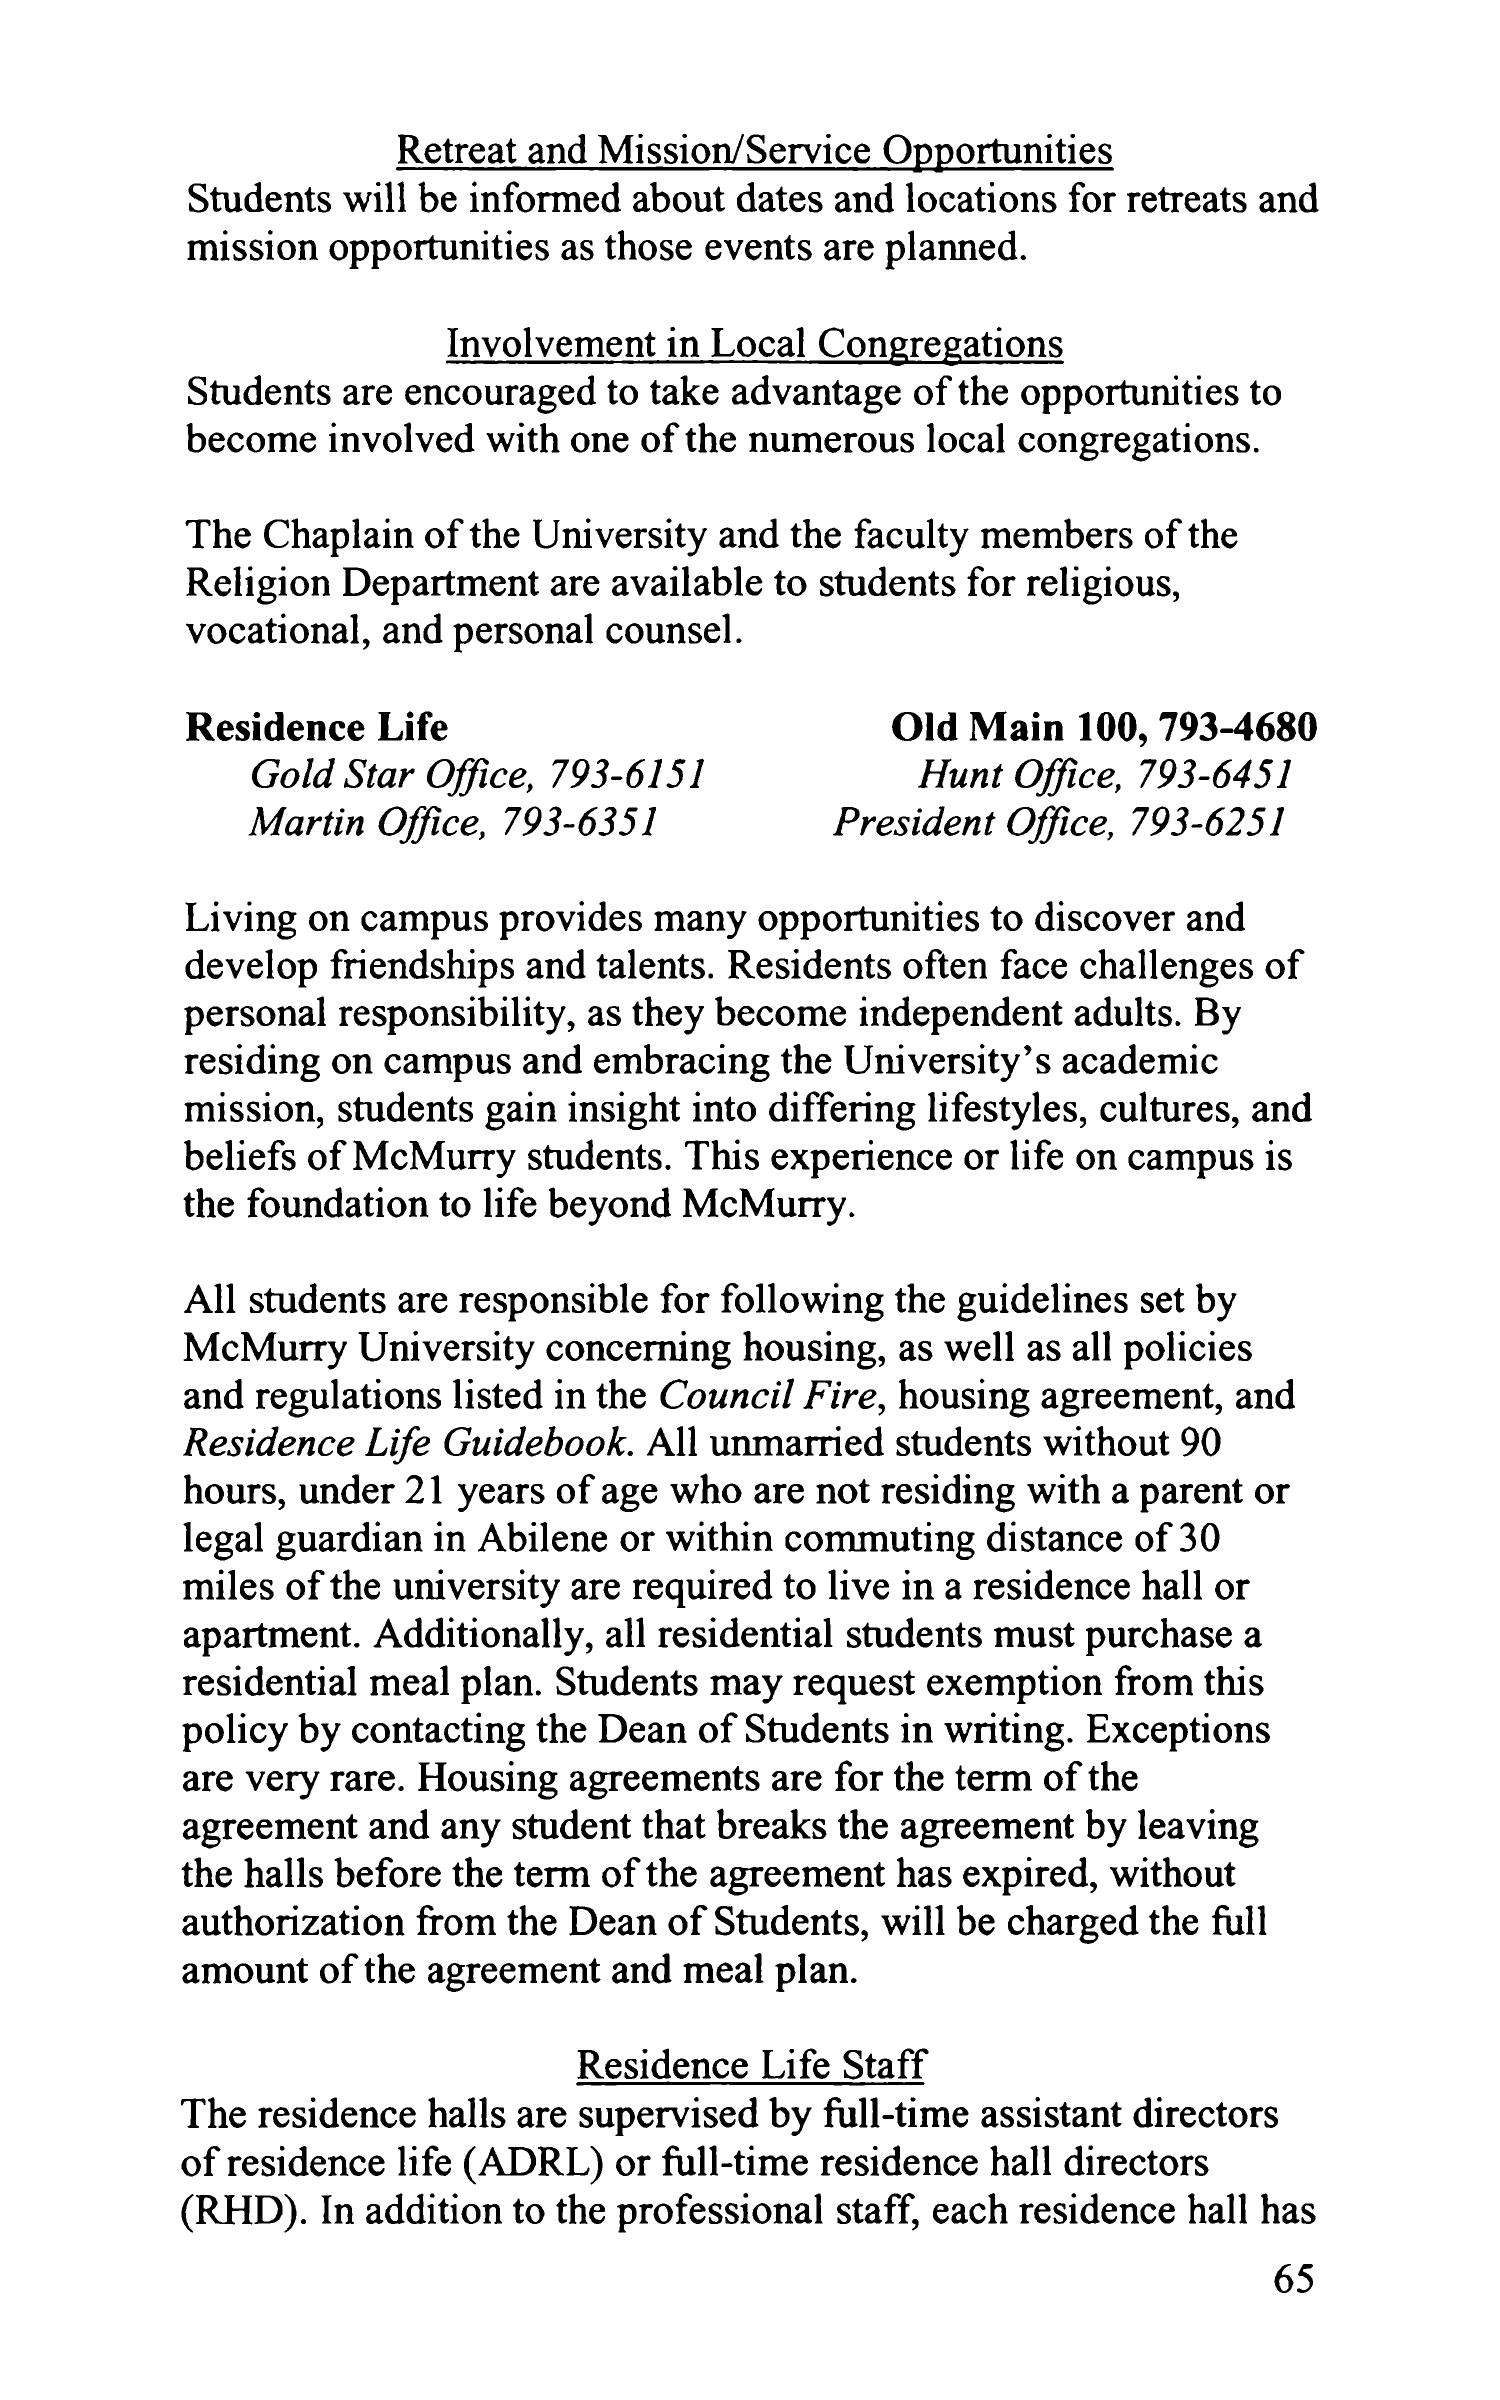 Council Fire, Handbook of McMurry University, 2003-2004
                                                
                                                    65
                                                